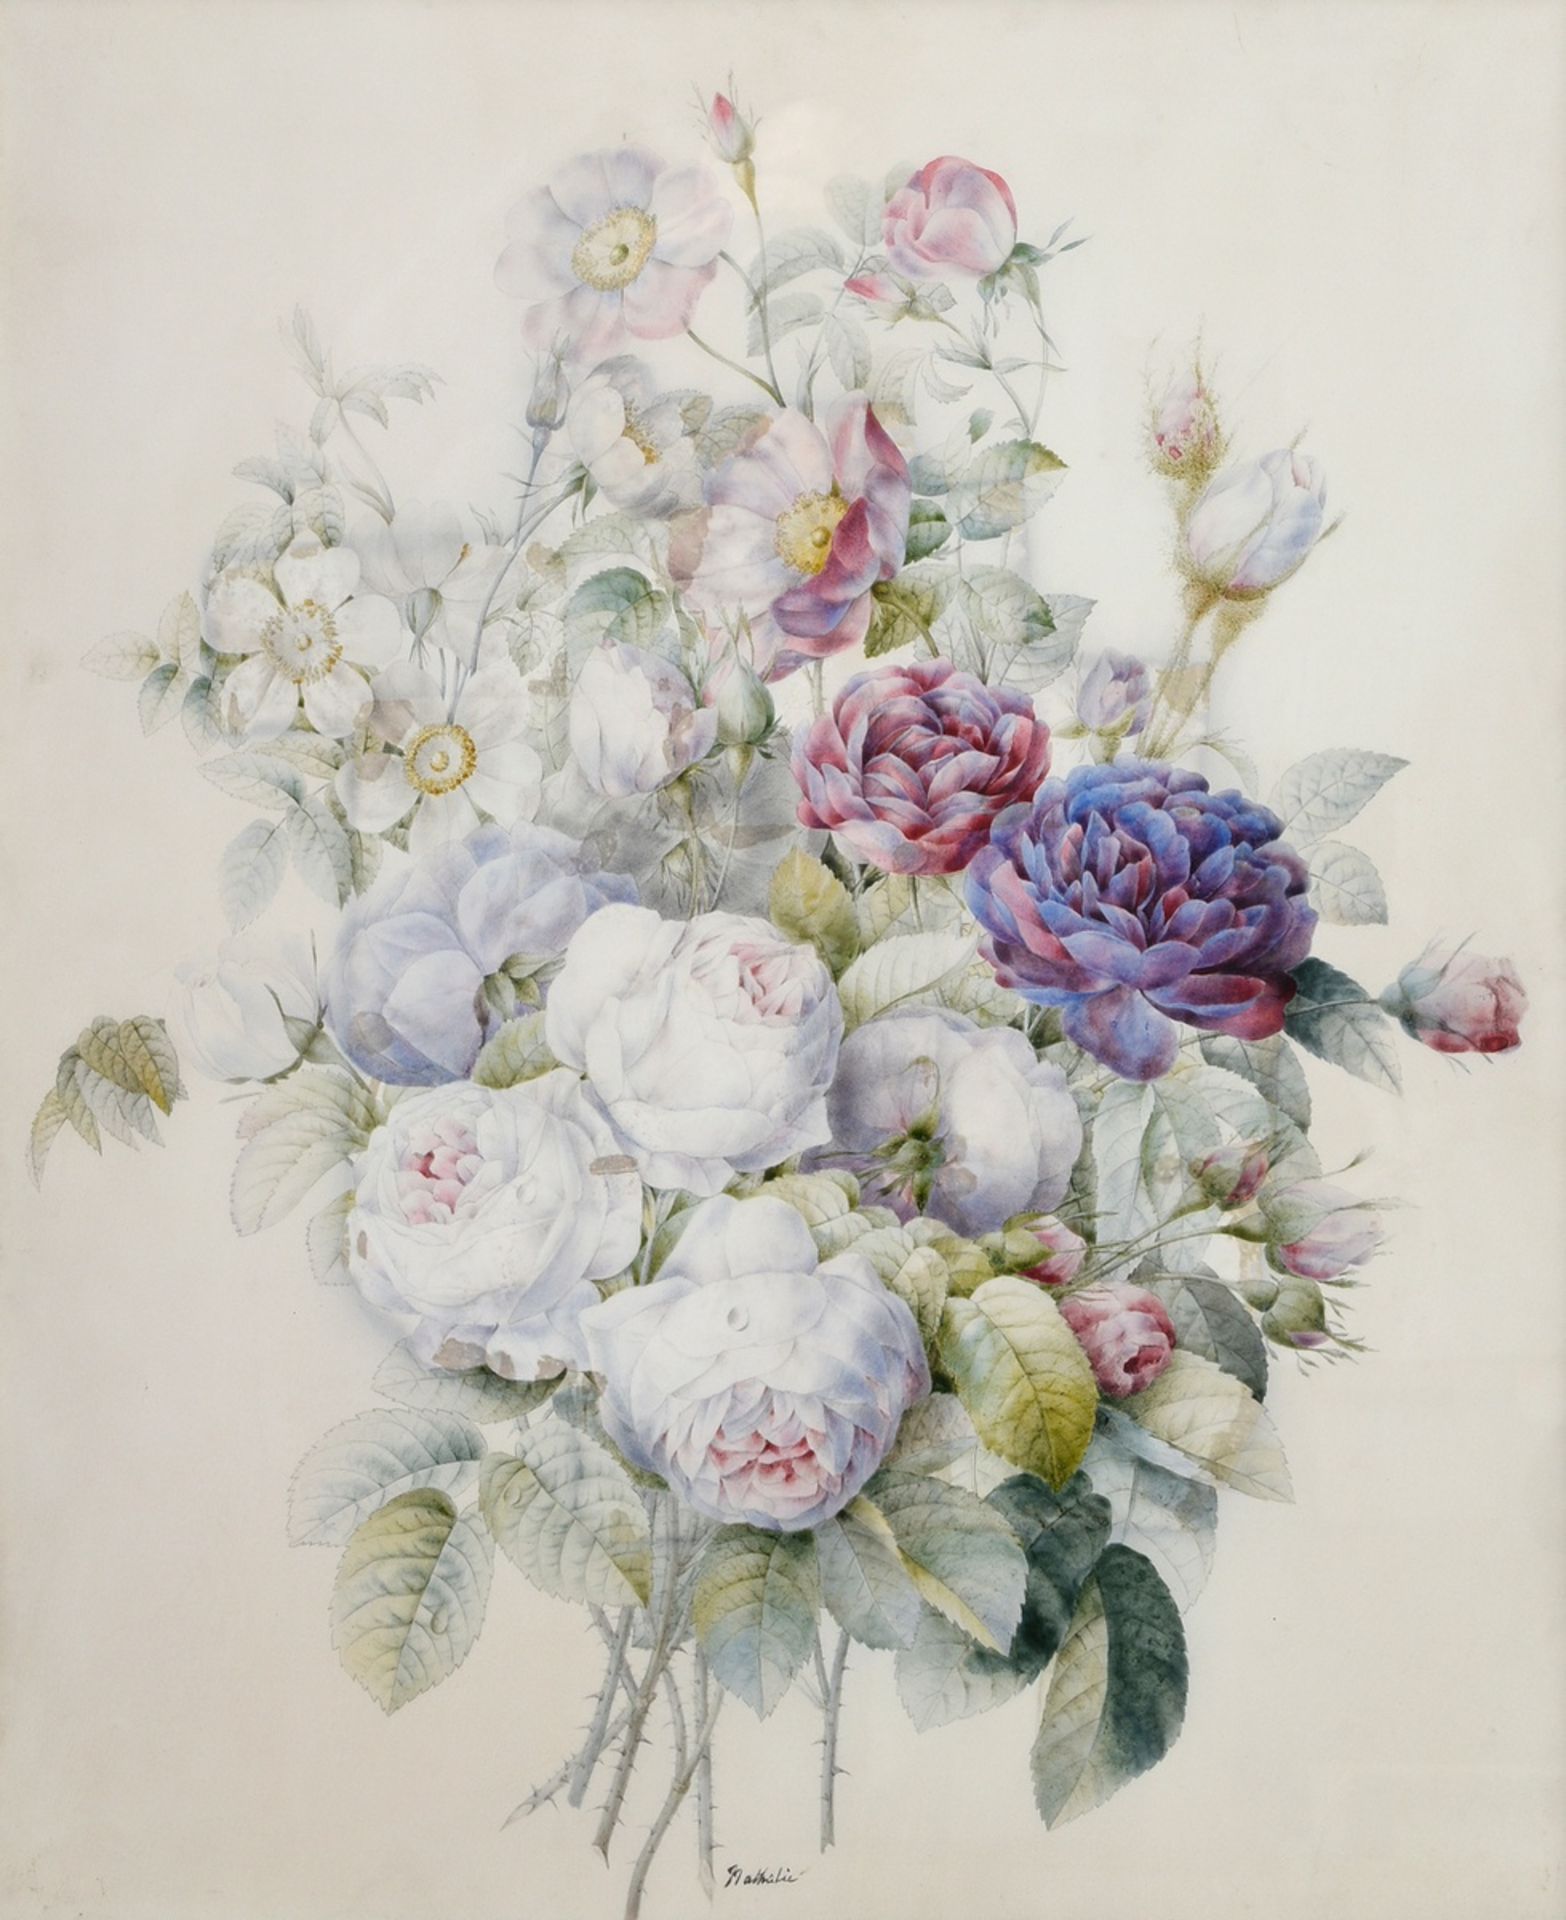 Renaud, Nathalie-Elma (1798-1872) "Bouquet of Roses" c. 1840/50, watercolor, pencil/paper, bottom m